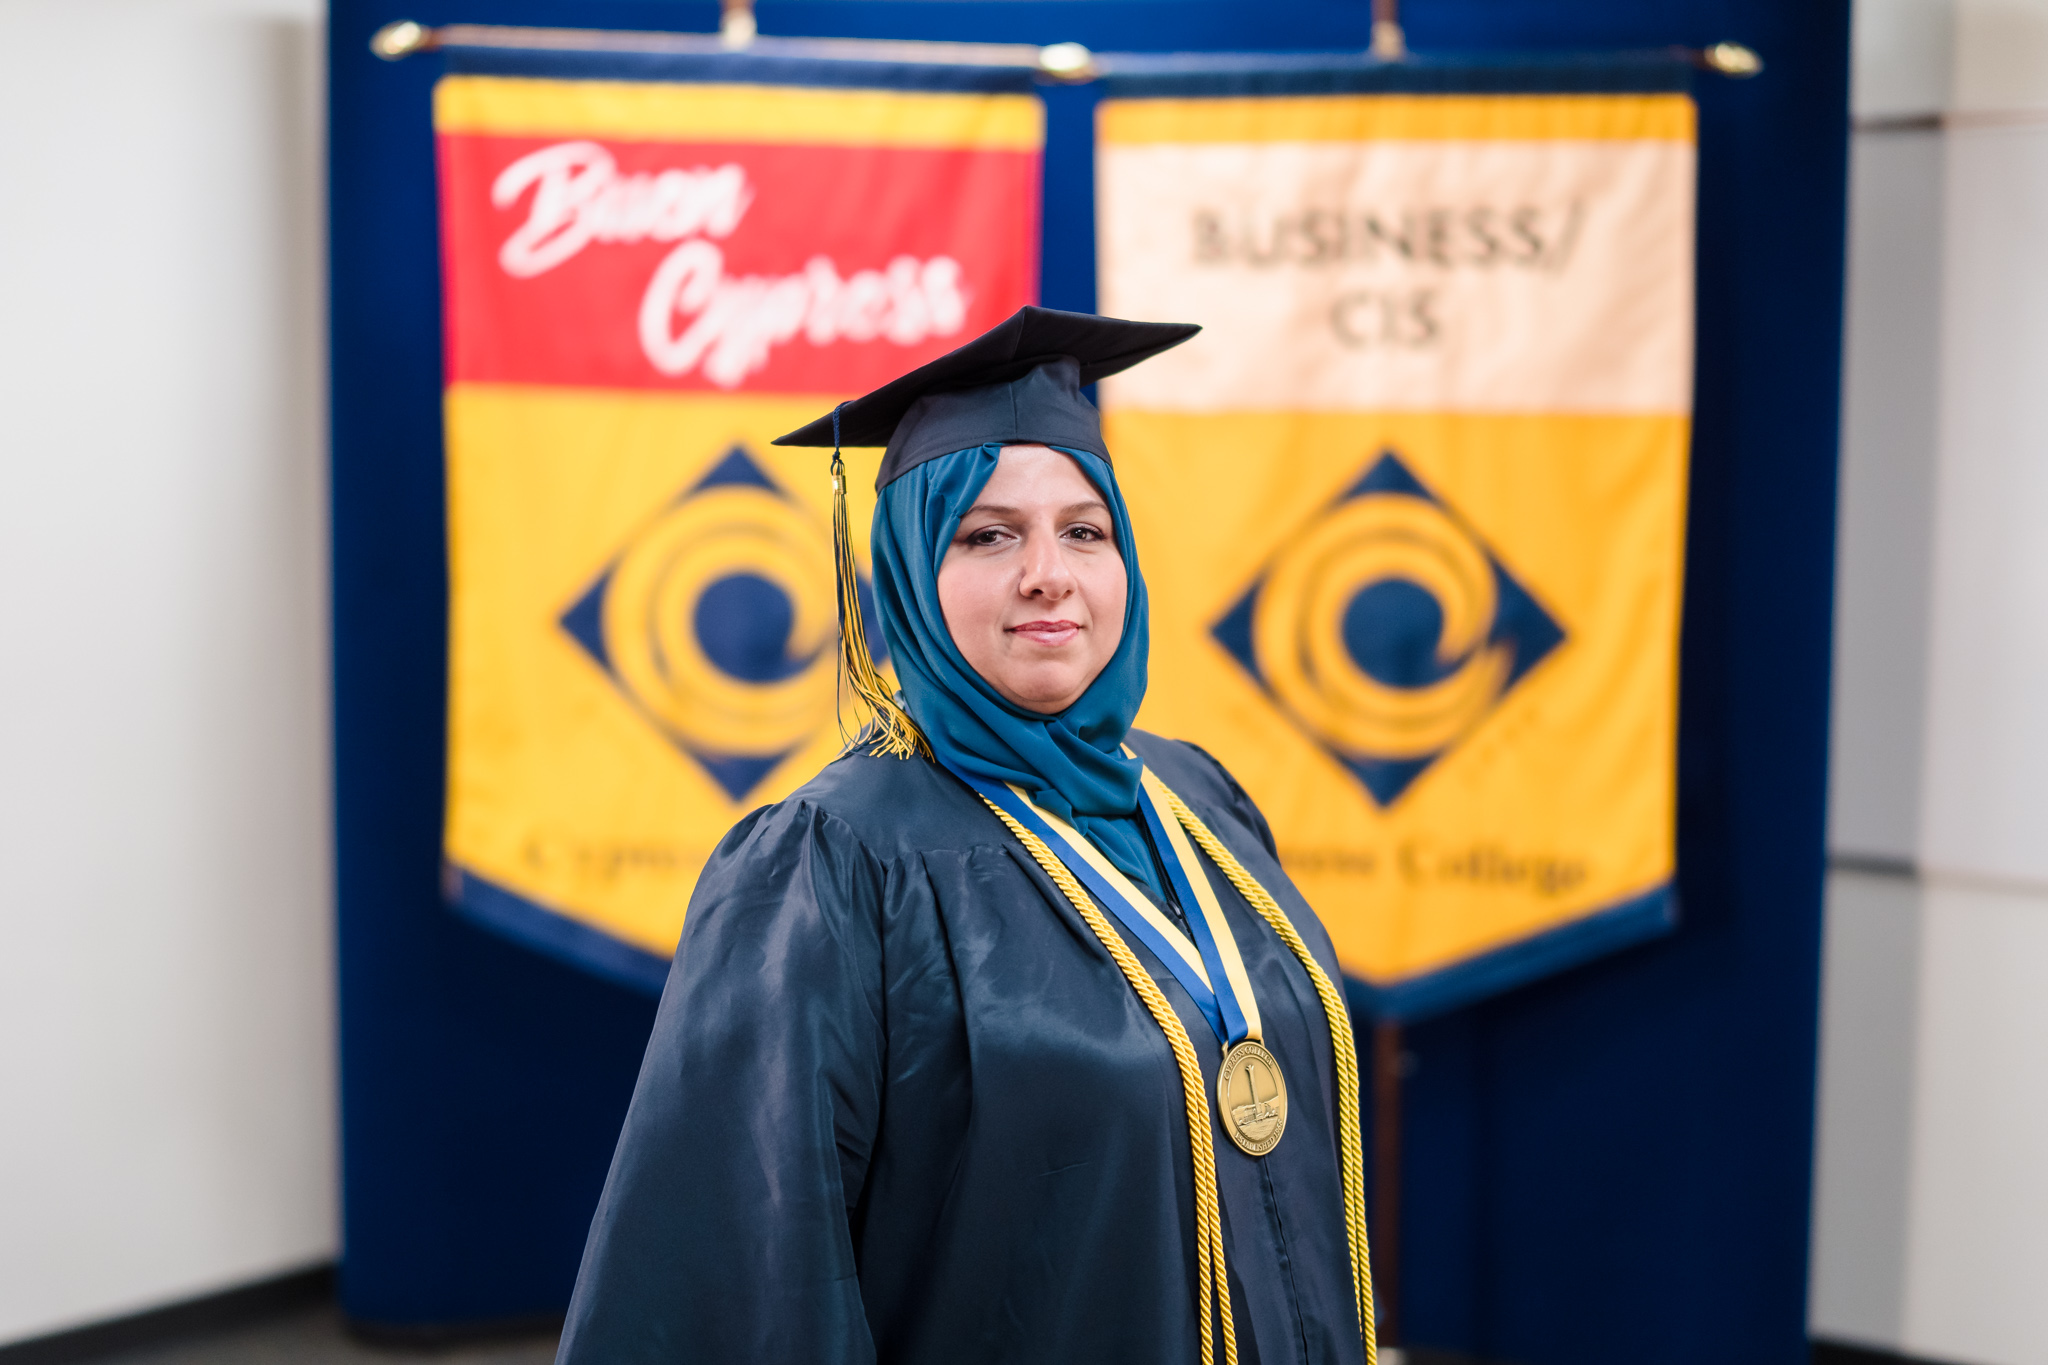 Student Rasha Jasim poses in front of the Cypress College pond wearing graduation regalia.